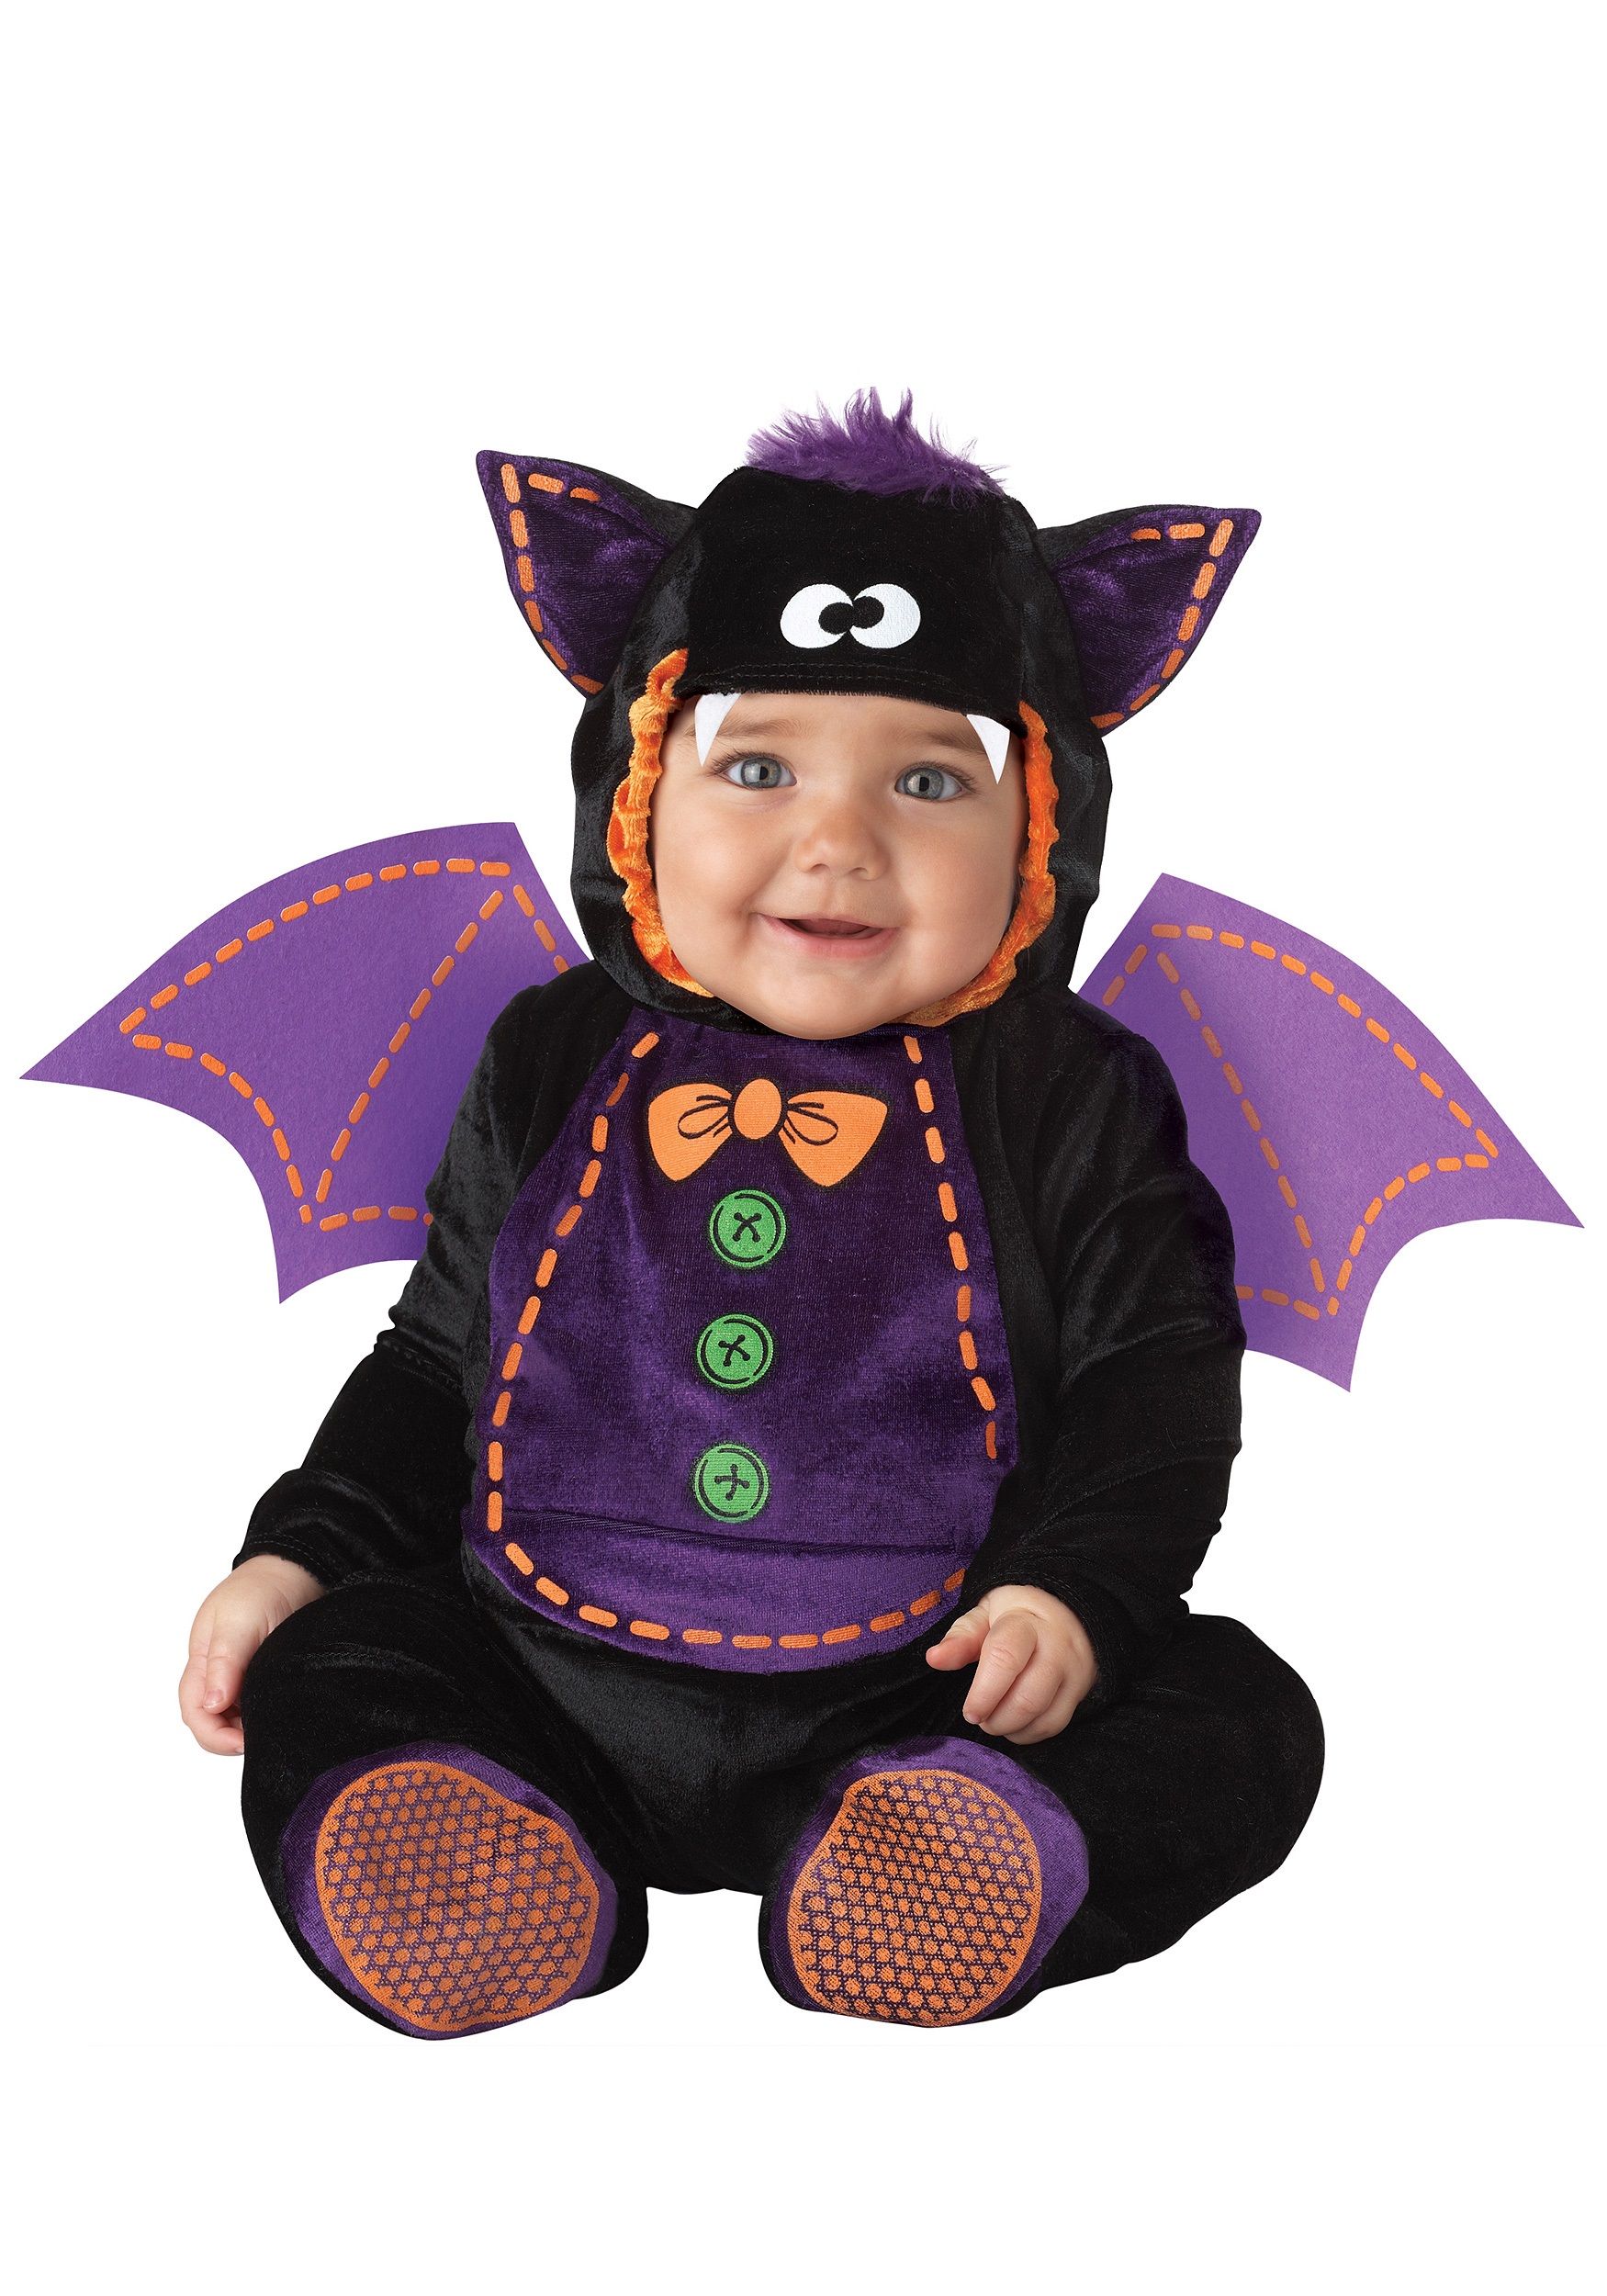 Meeyou Kids Unisex Vampire Bat Costume